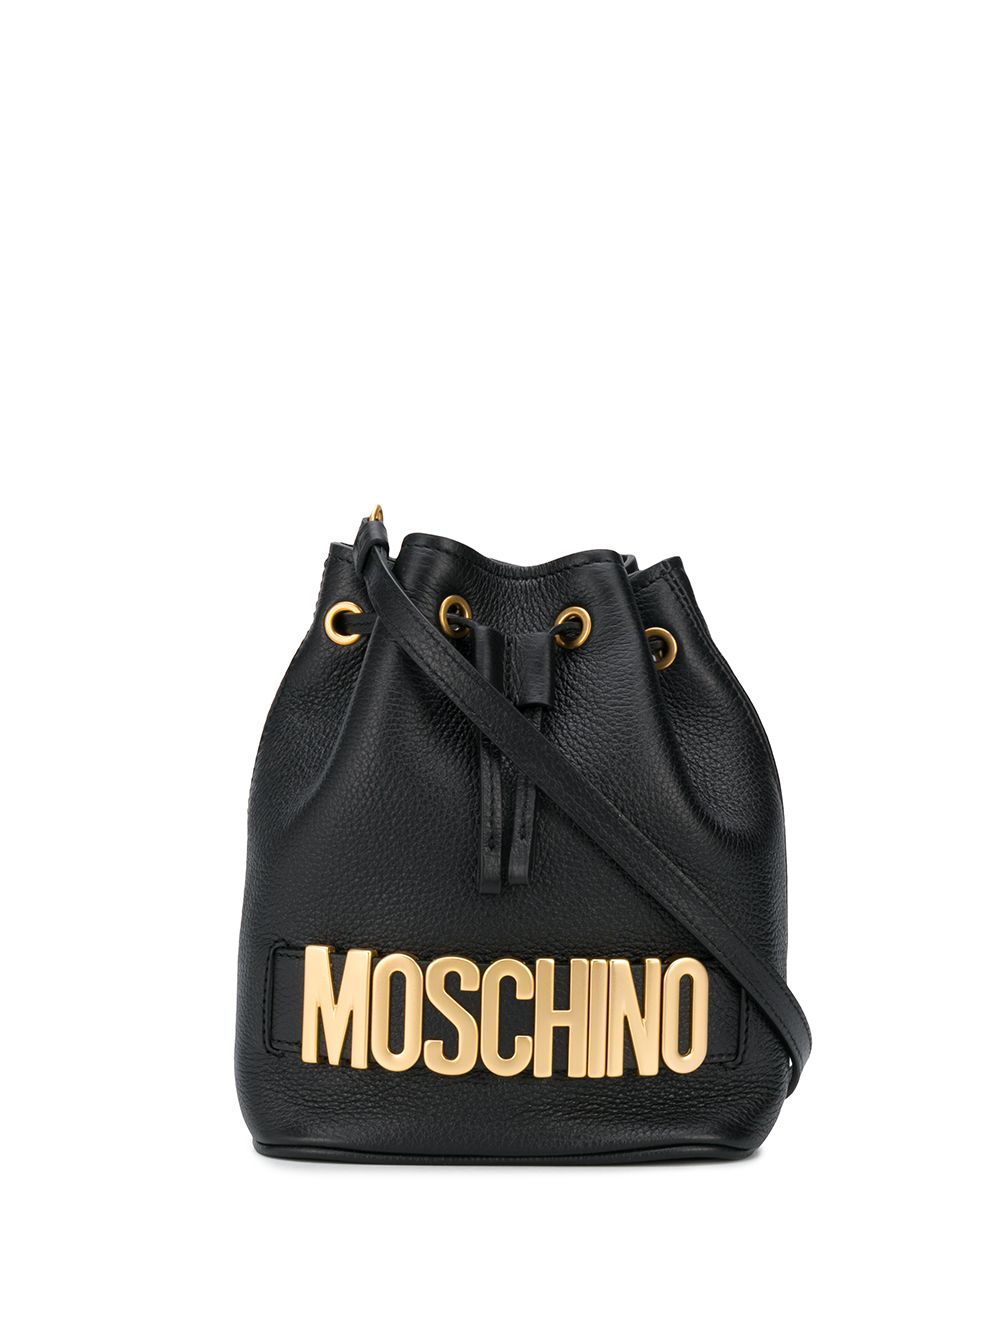 фото Moschino сумка-ведро с металлическим логотипом